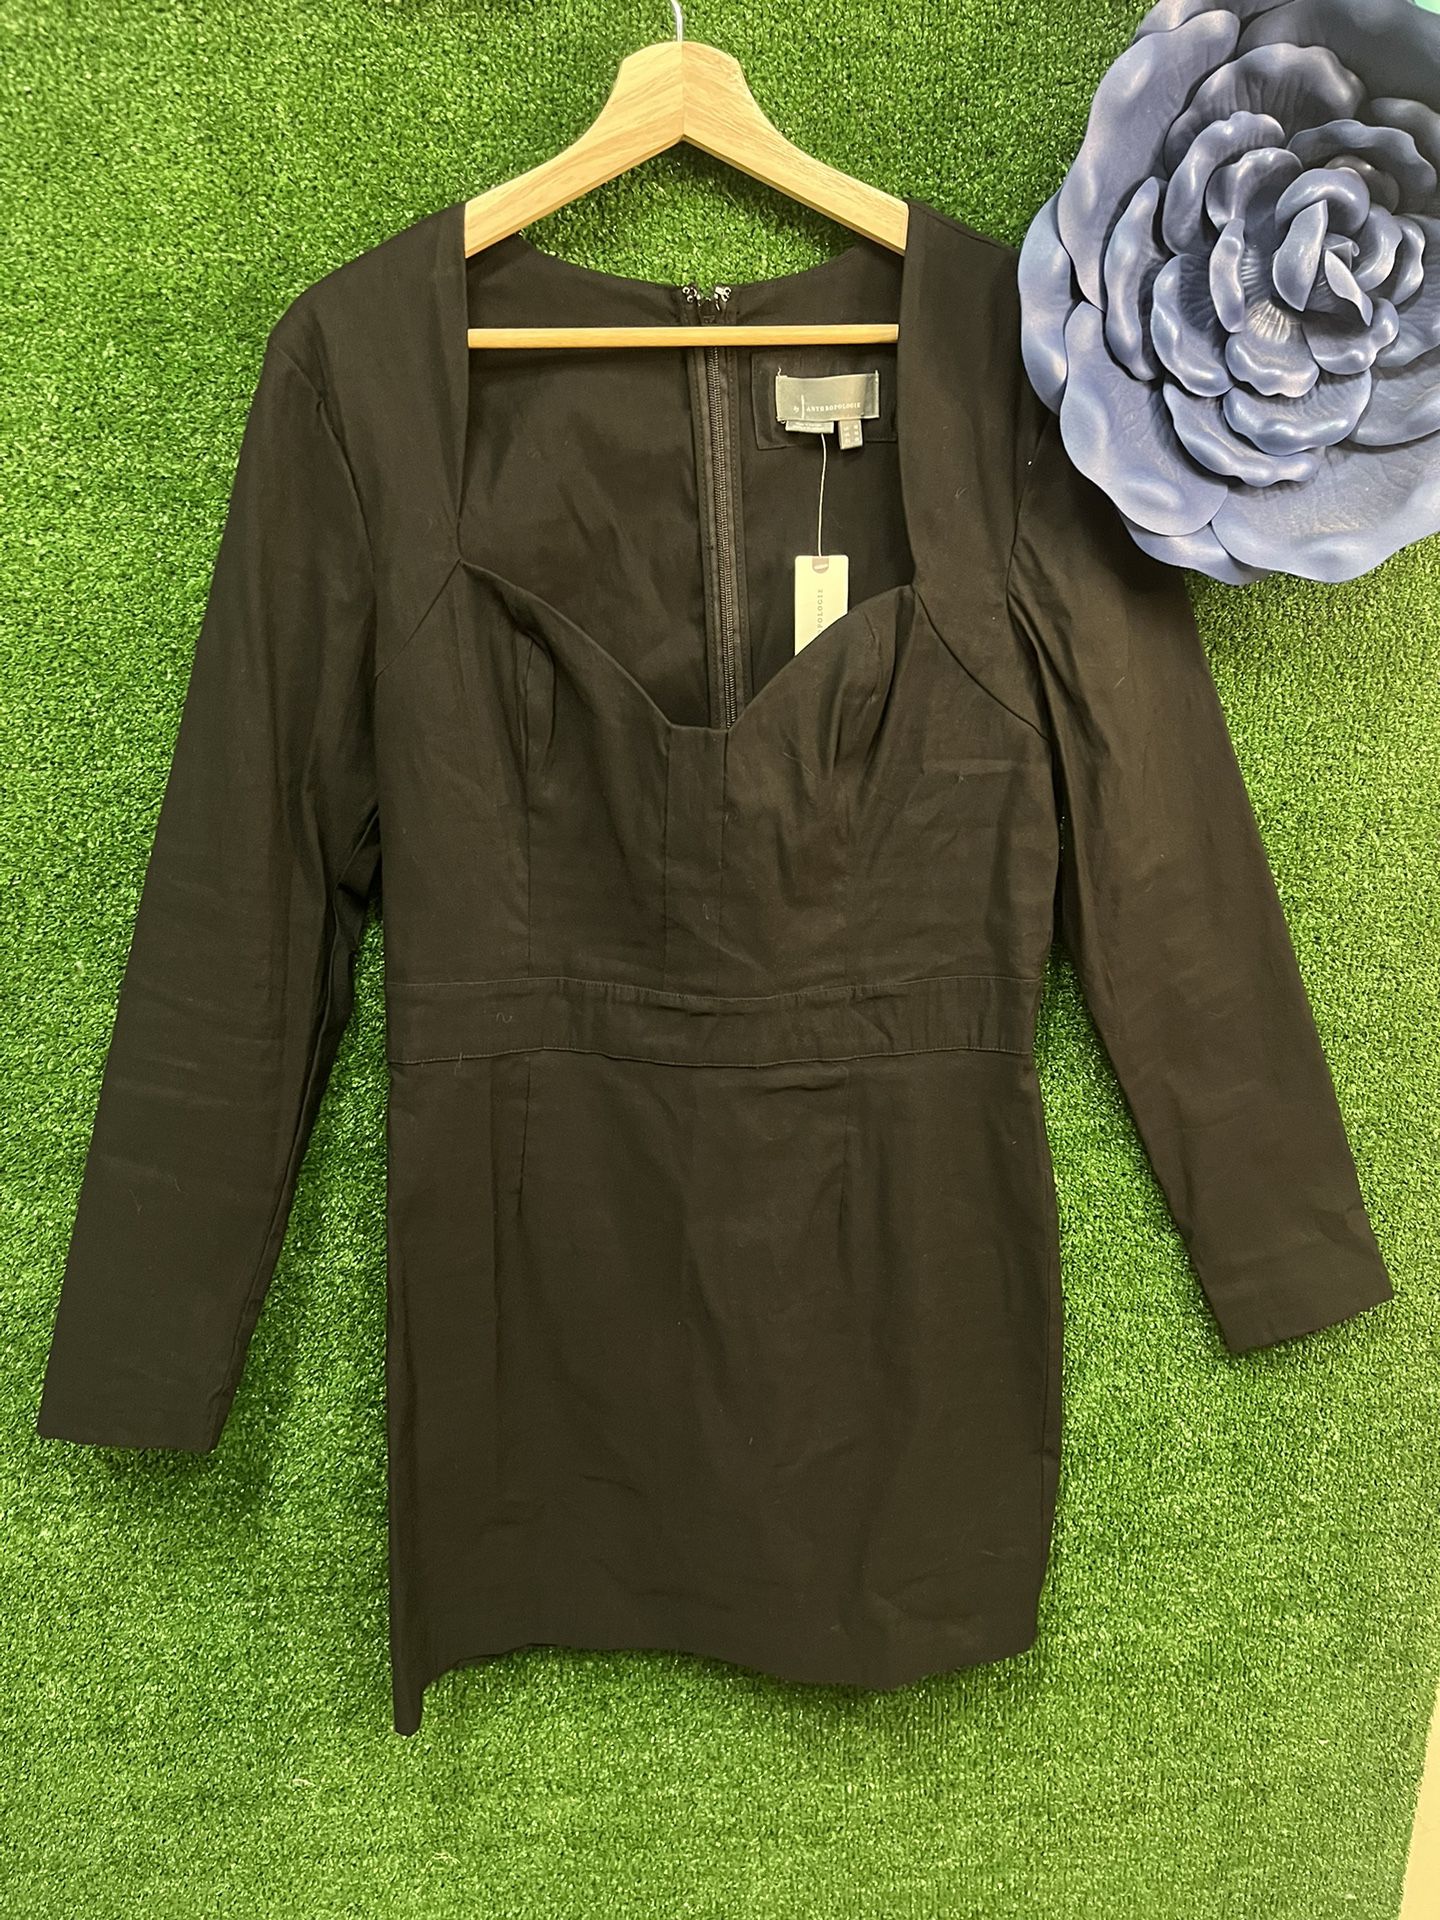 Anthropologie Black Long Sleeve Dress Size 14 NWT Brand New